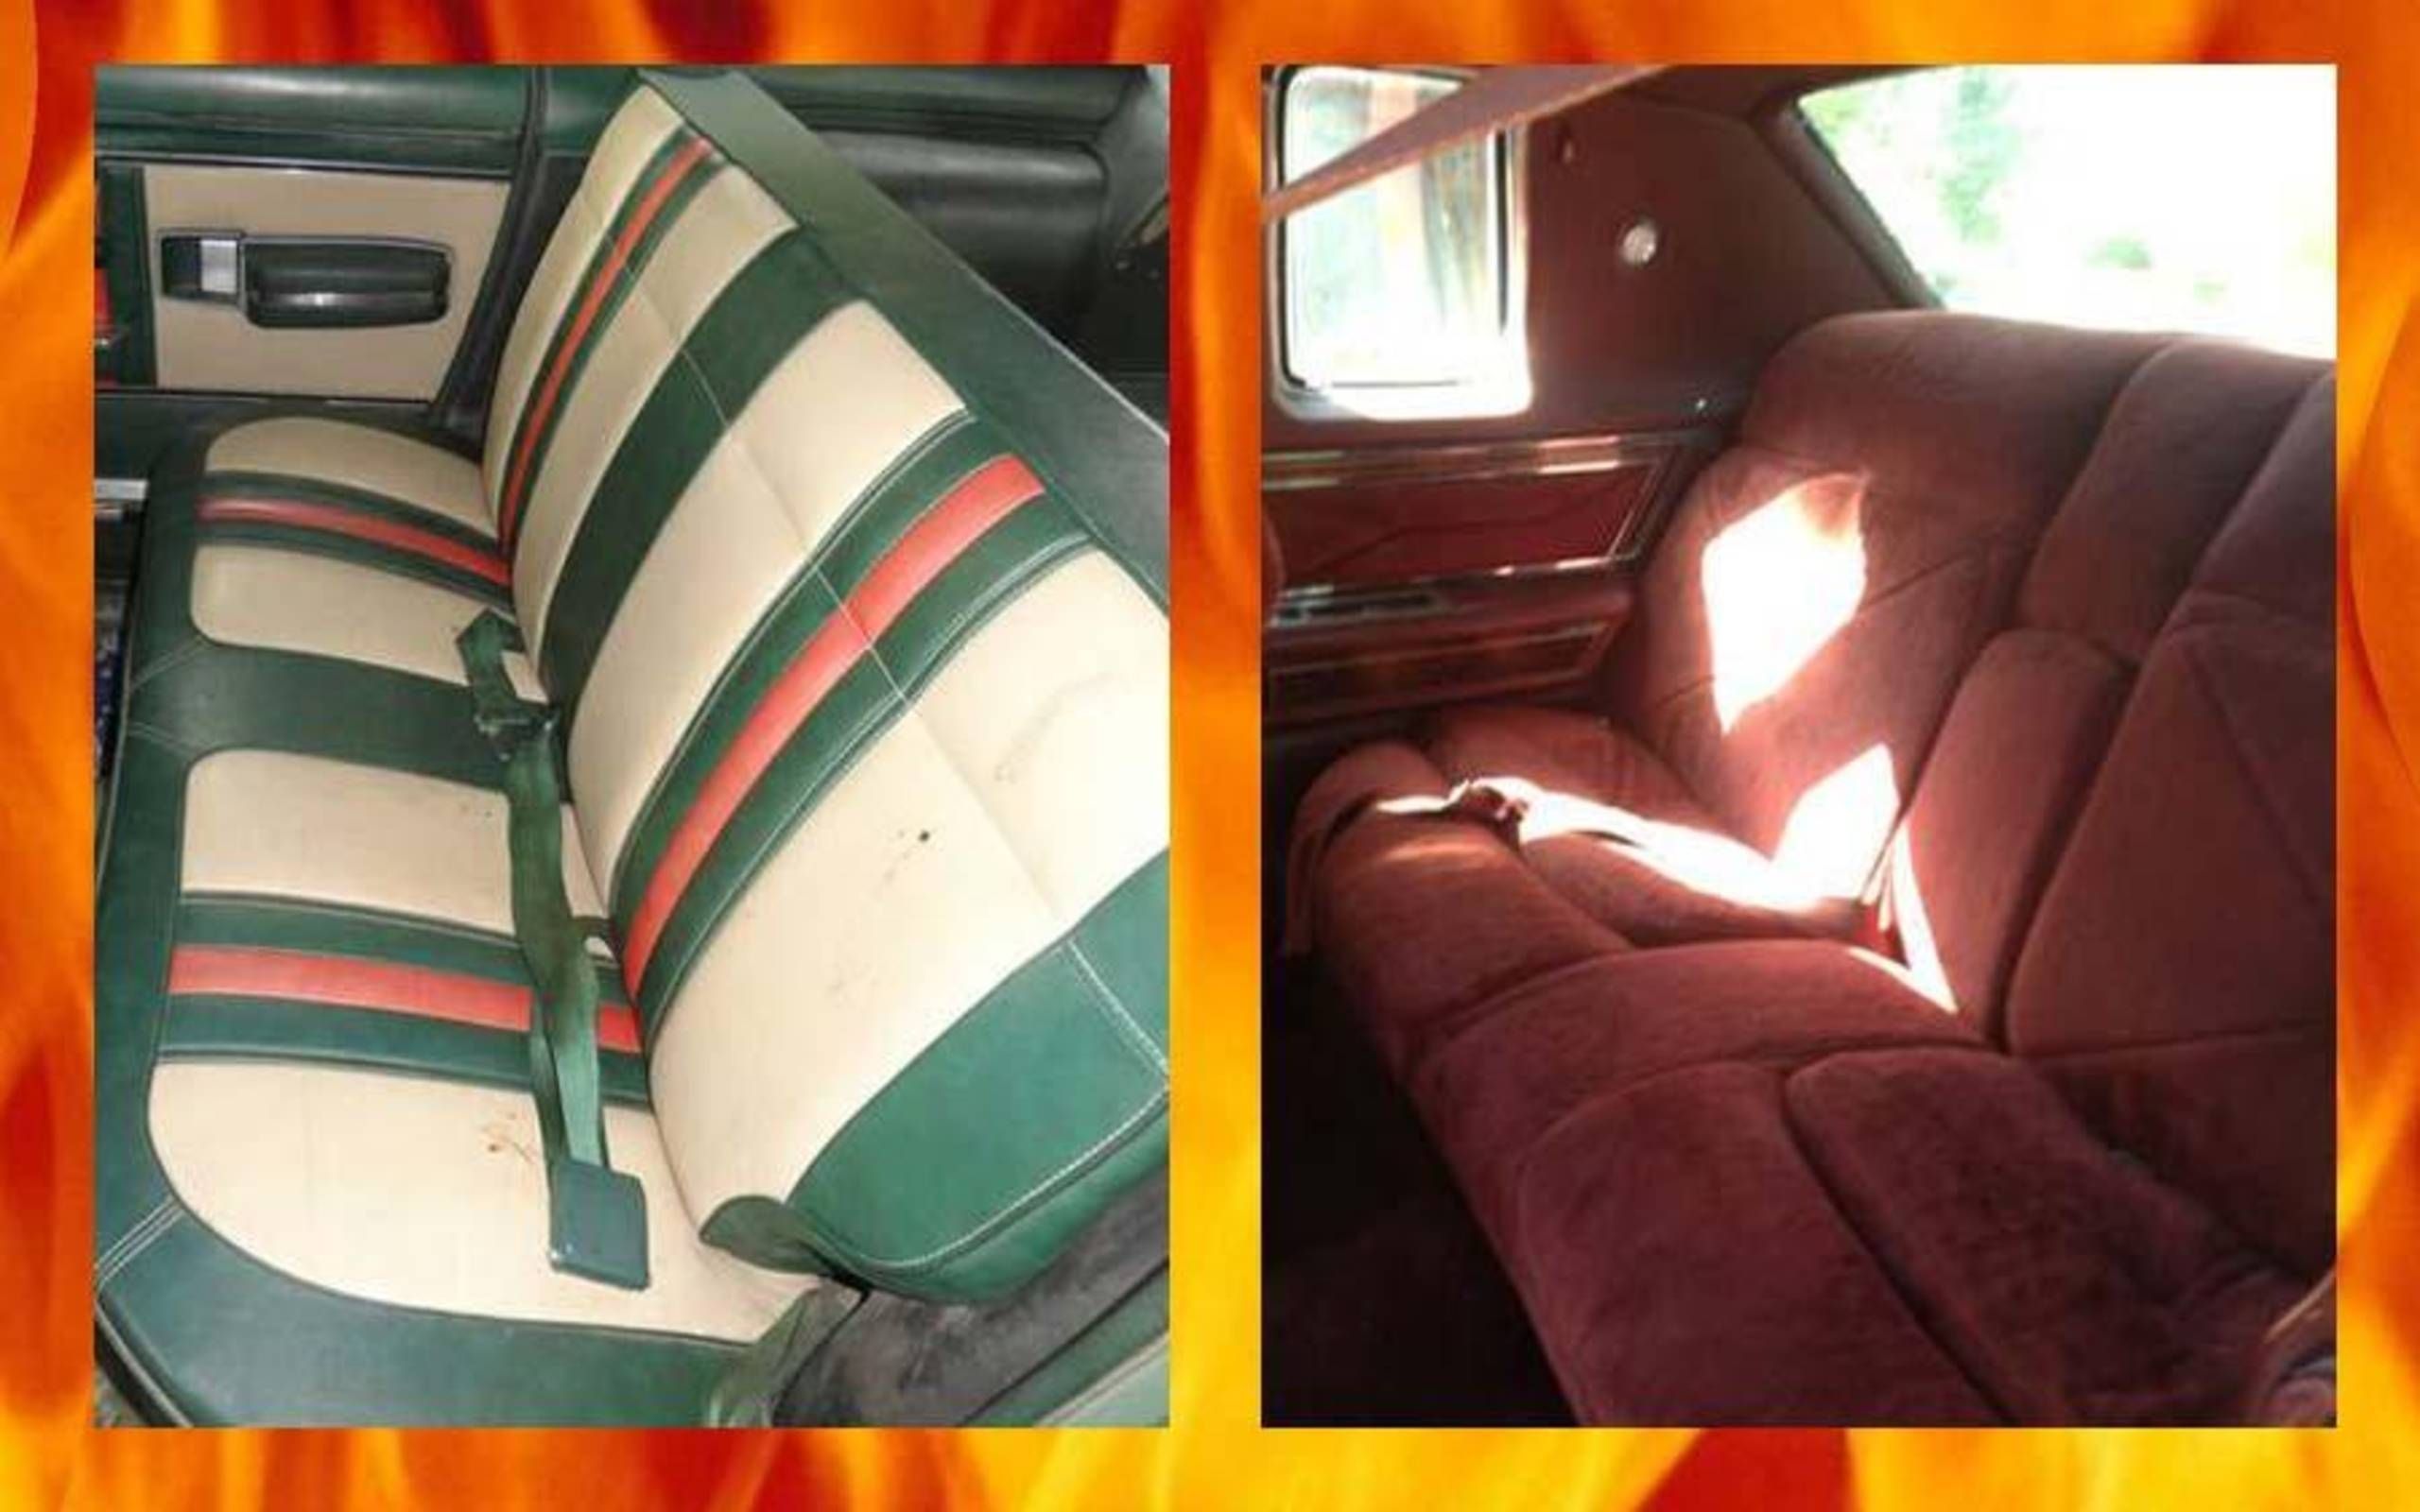 Gucci Car Seat Cover 